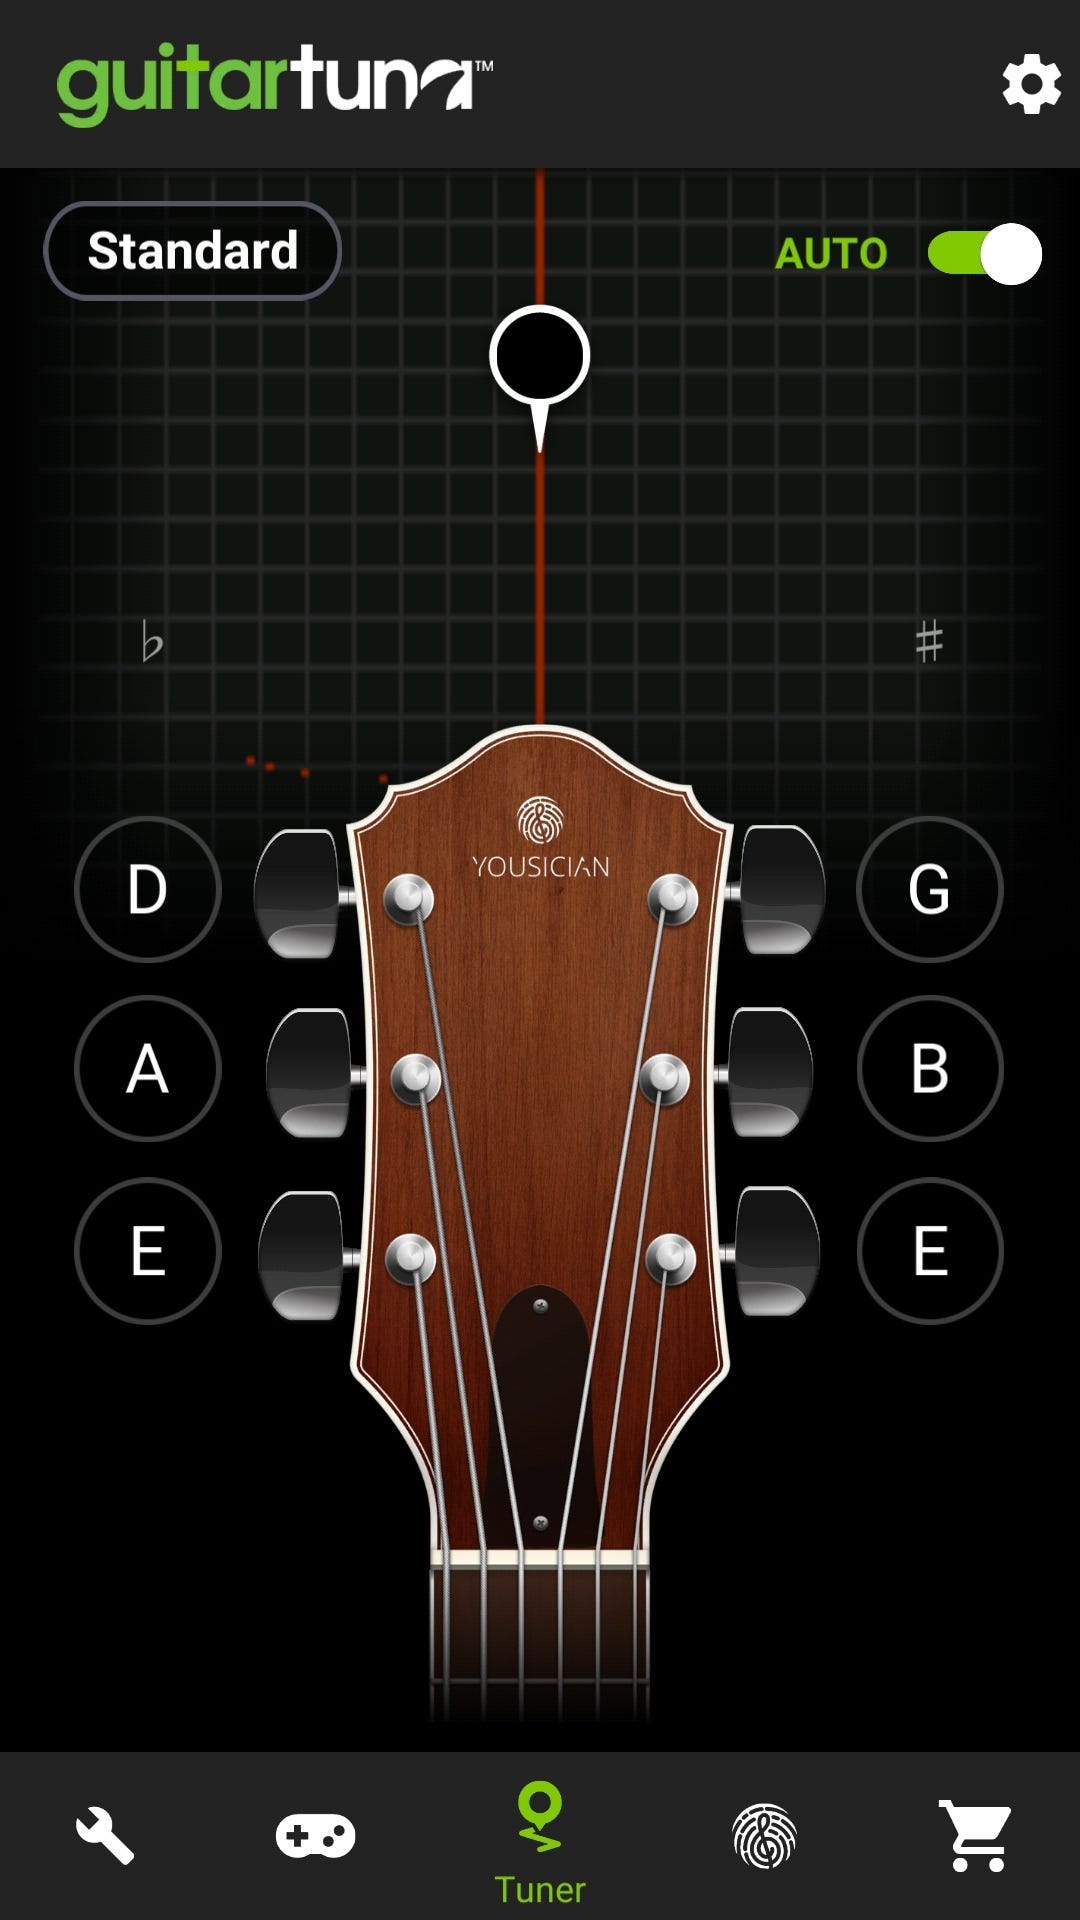 Tuning your guitar with the GuitarTuna app | by Kieran Ball | Medium